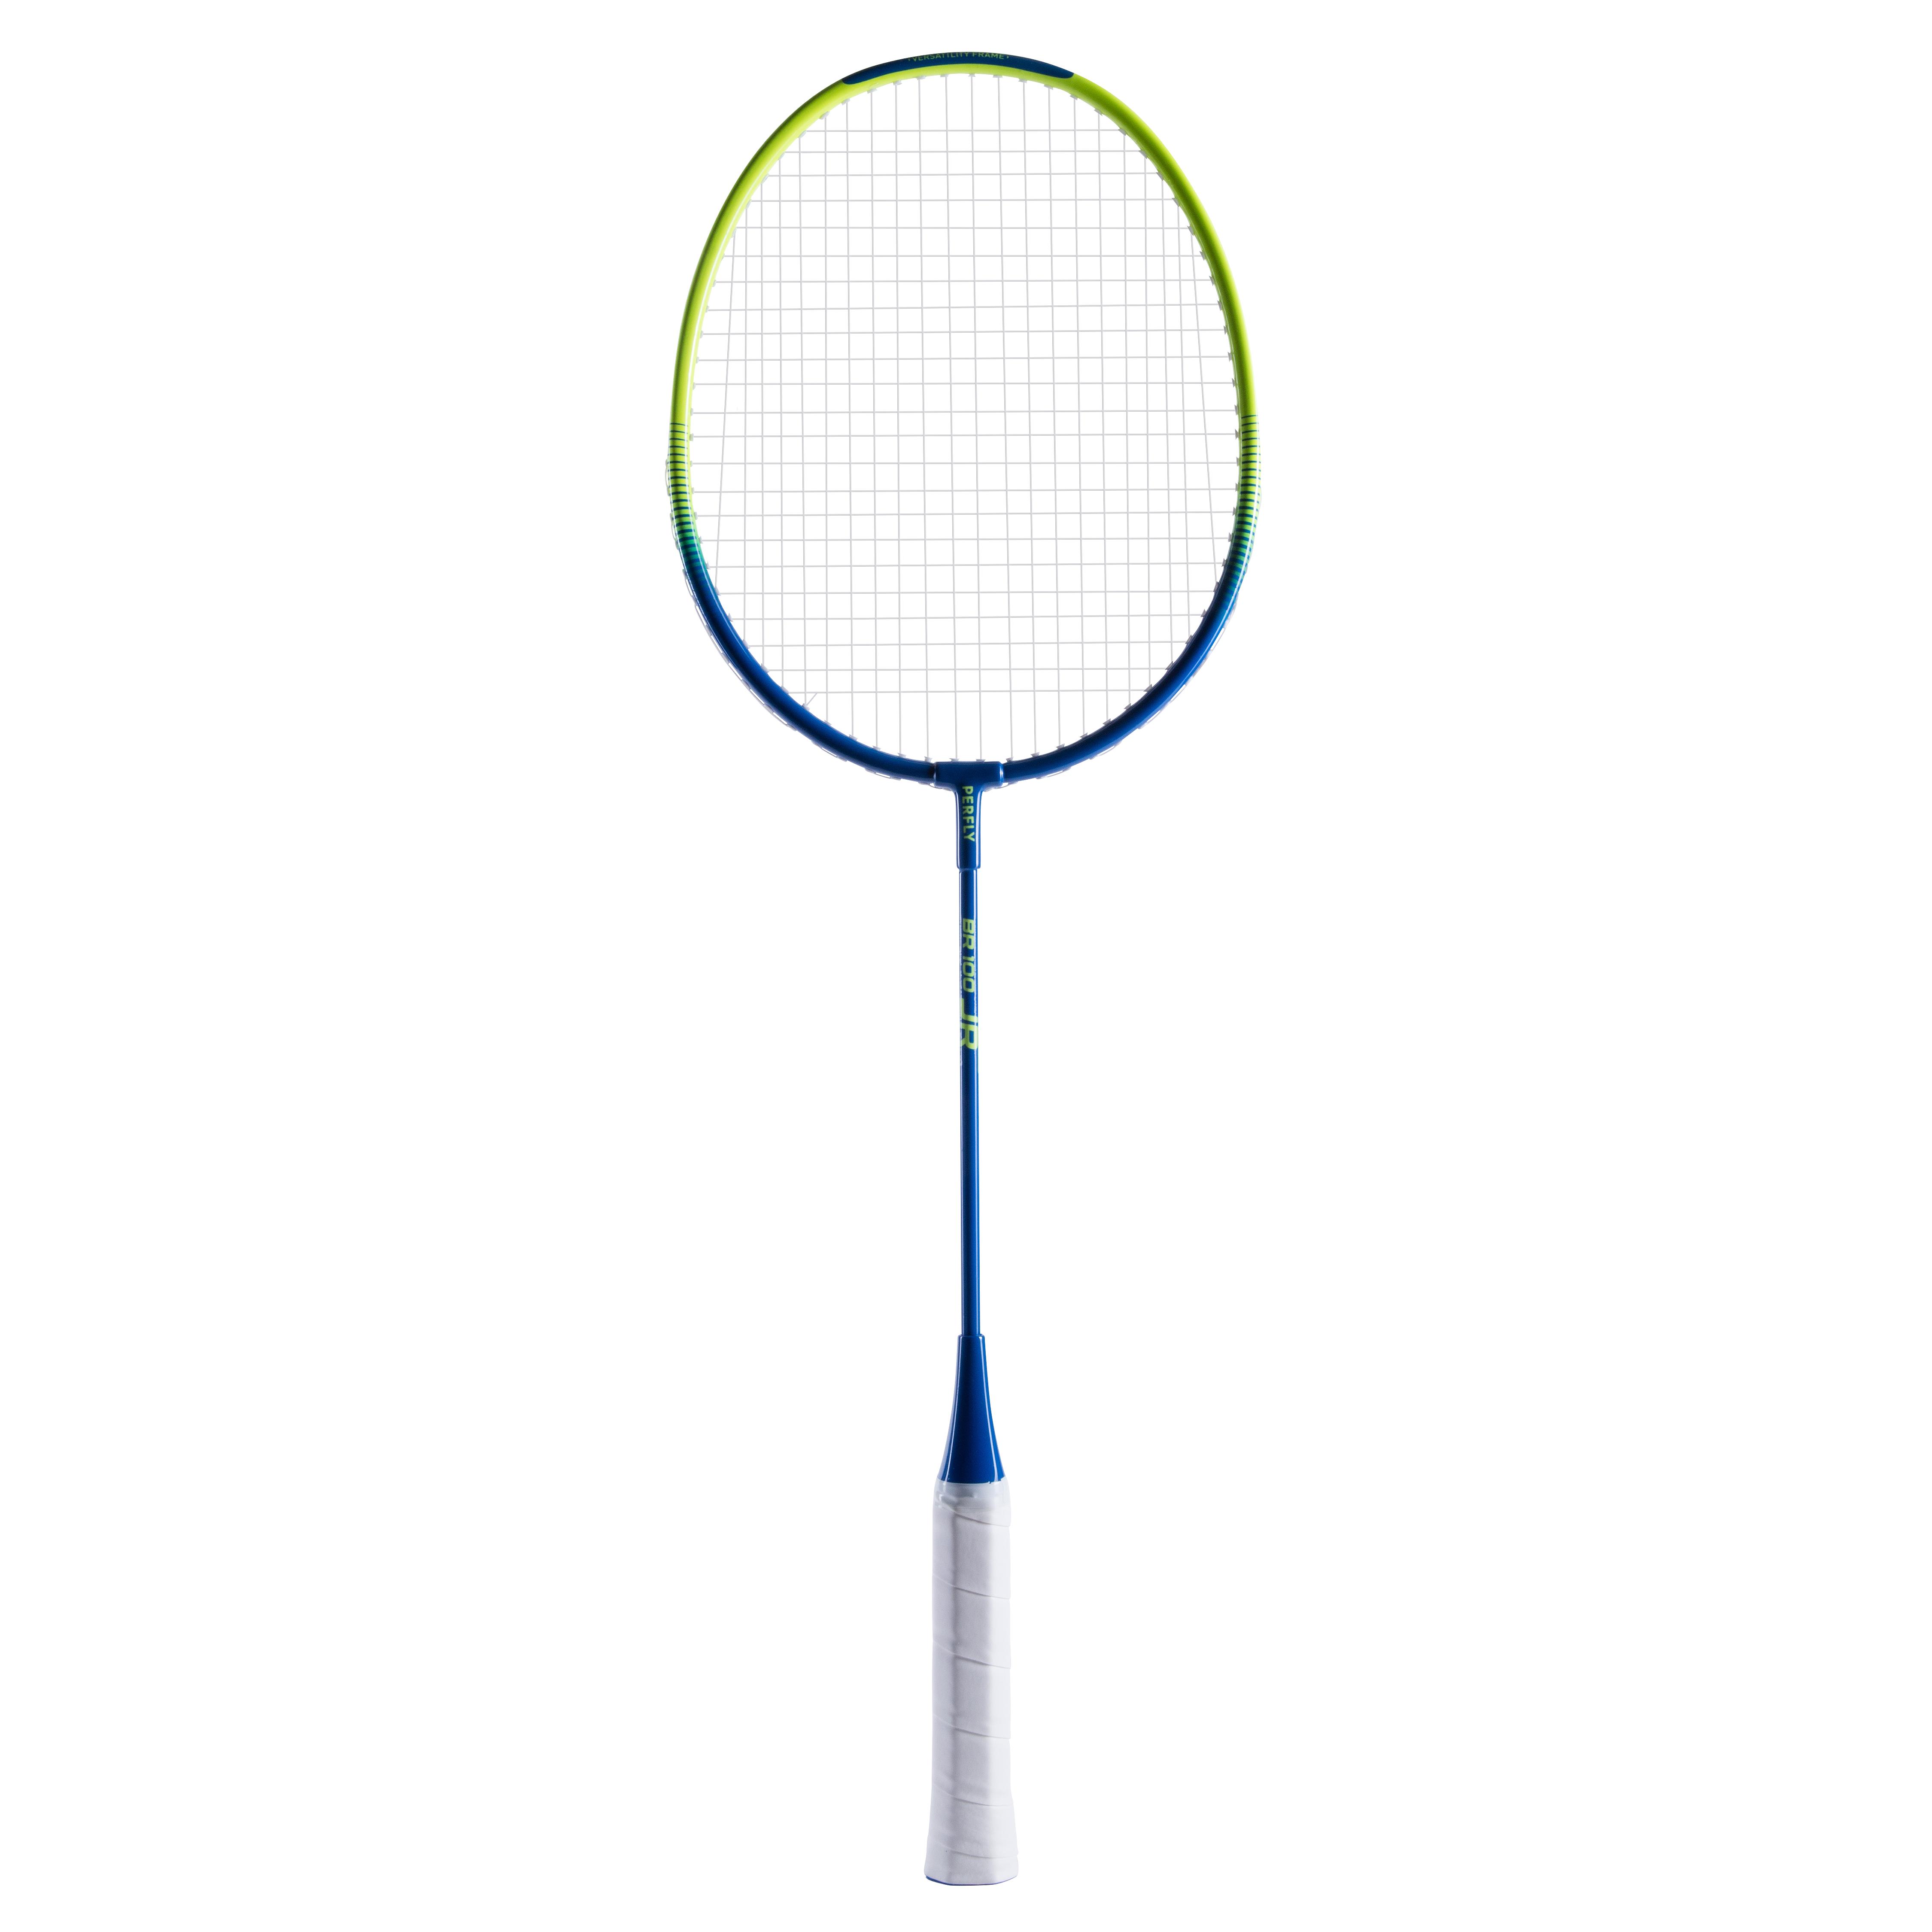 decathlon badminton racket price